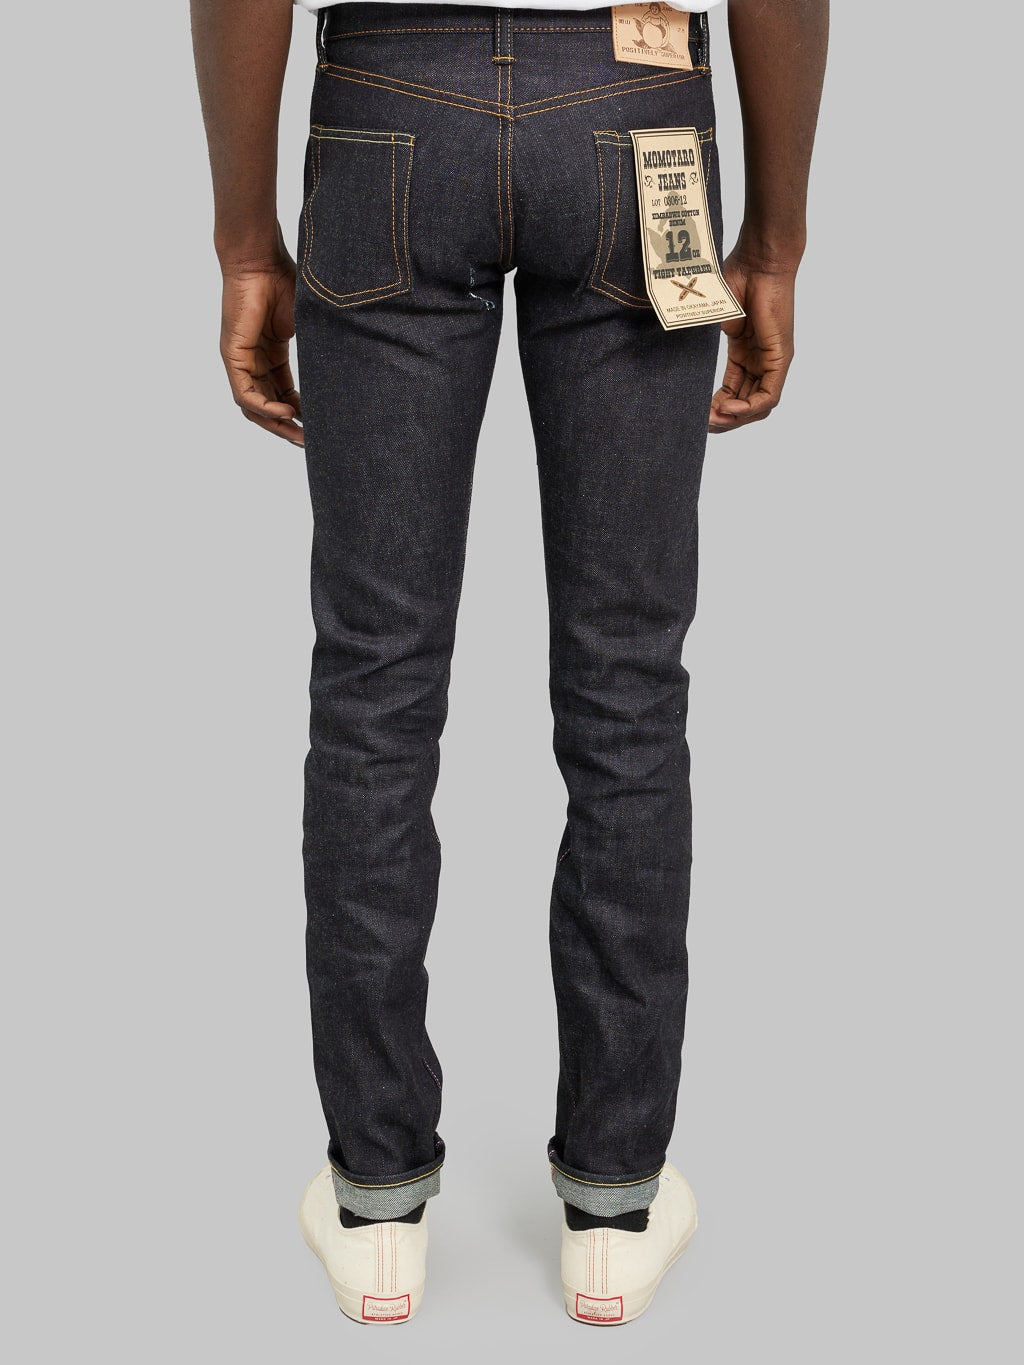 momotaro jeans 0306 12 12oz selvedge denim tight tapered back fit